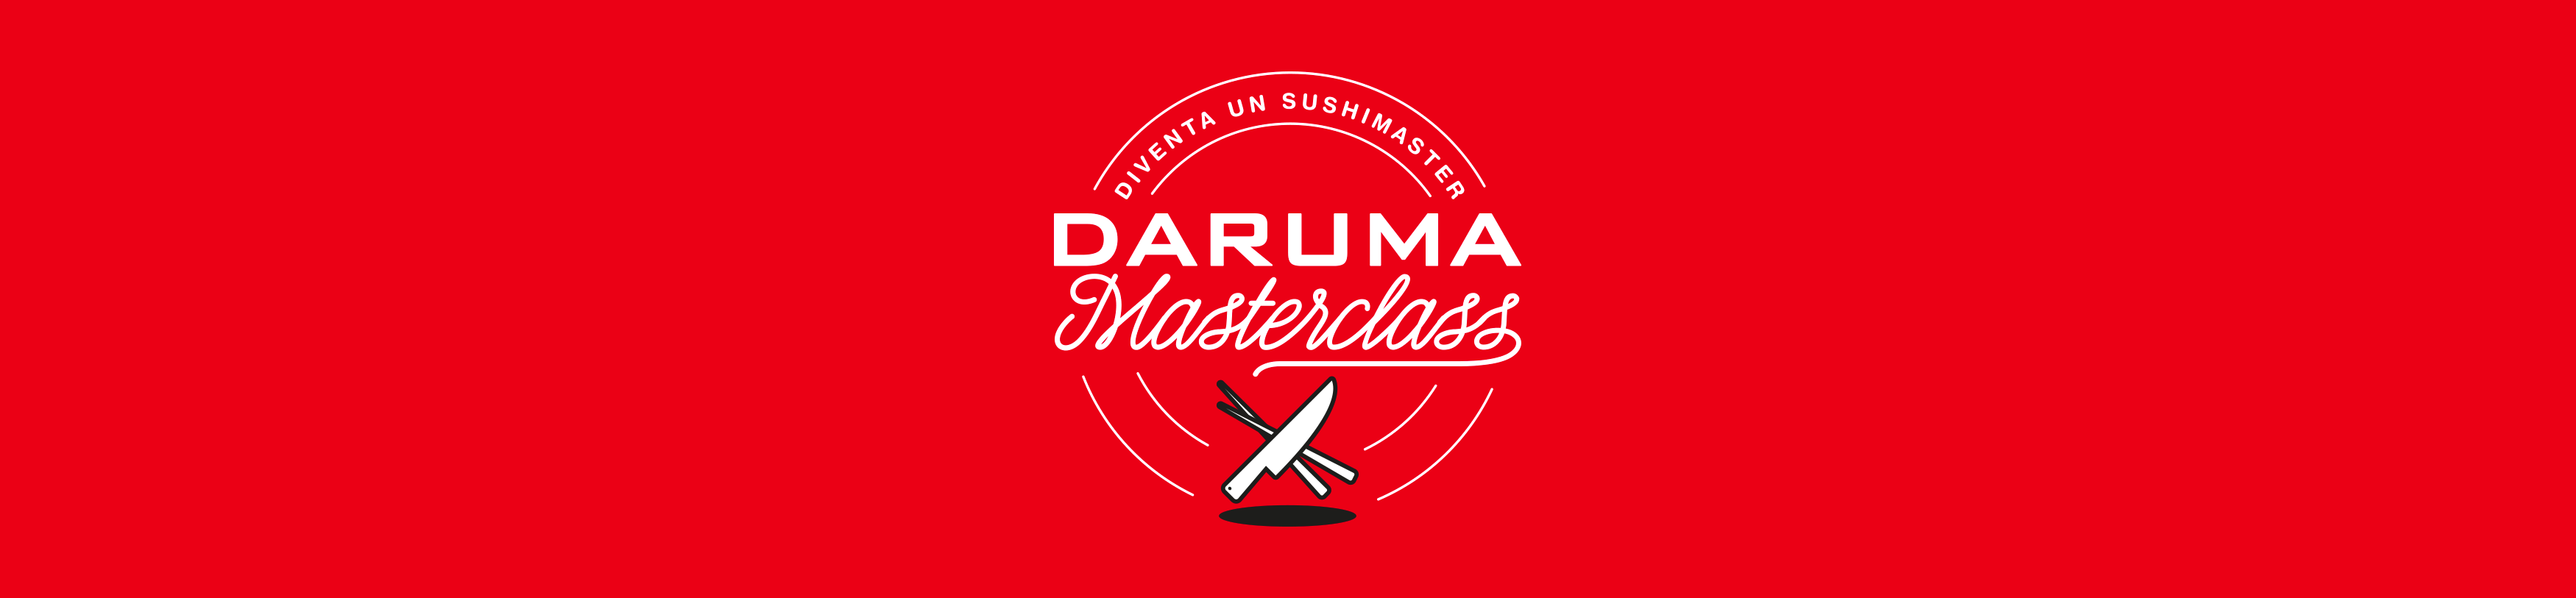 Daruma Masterclass